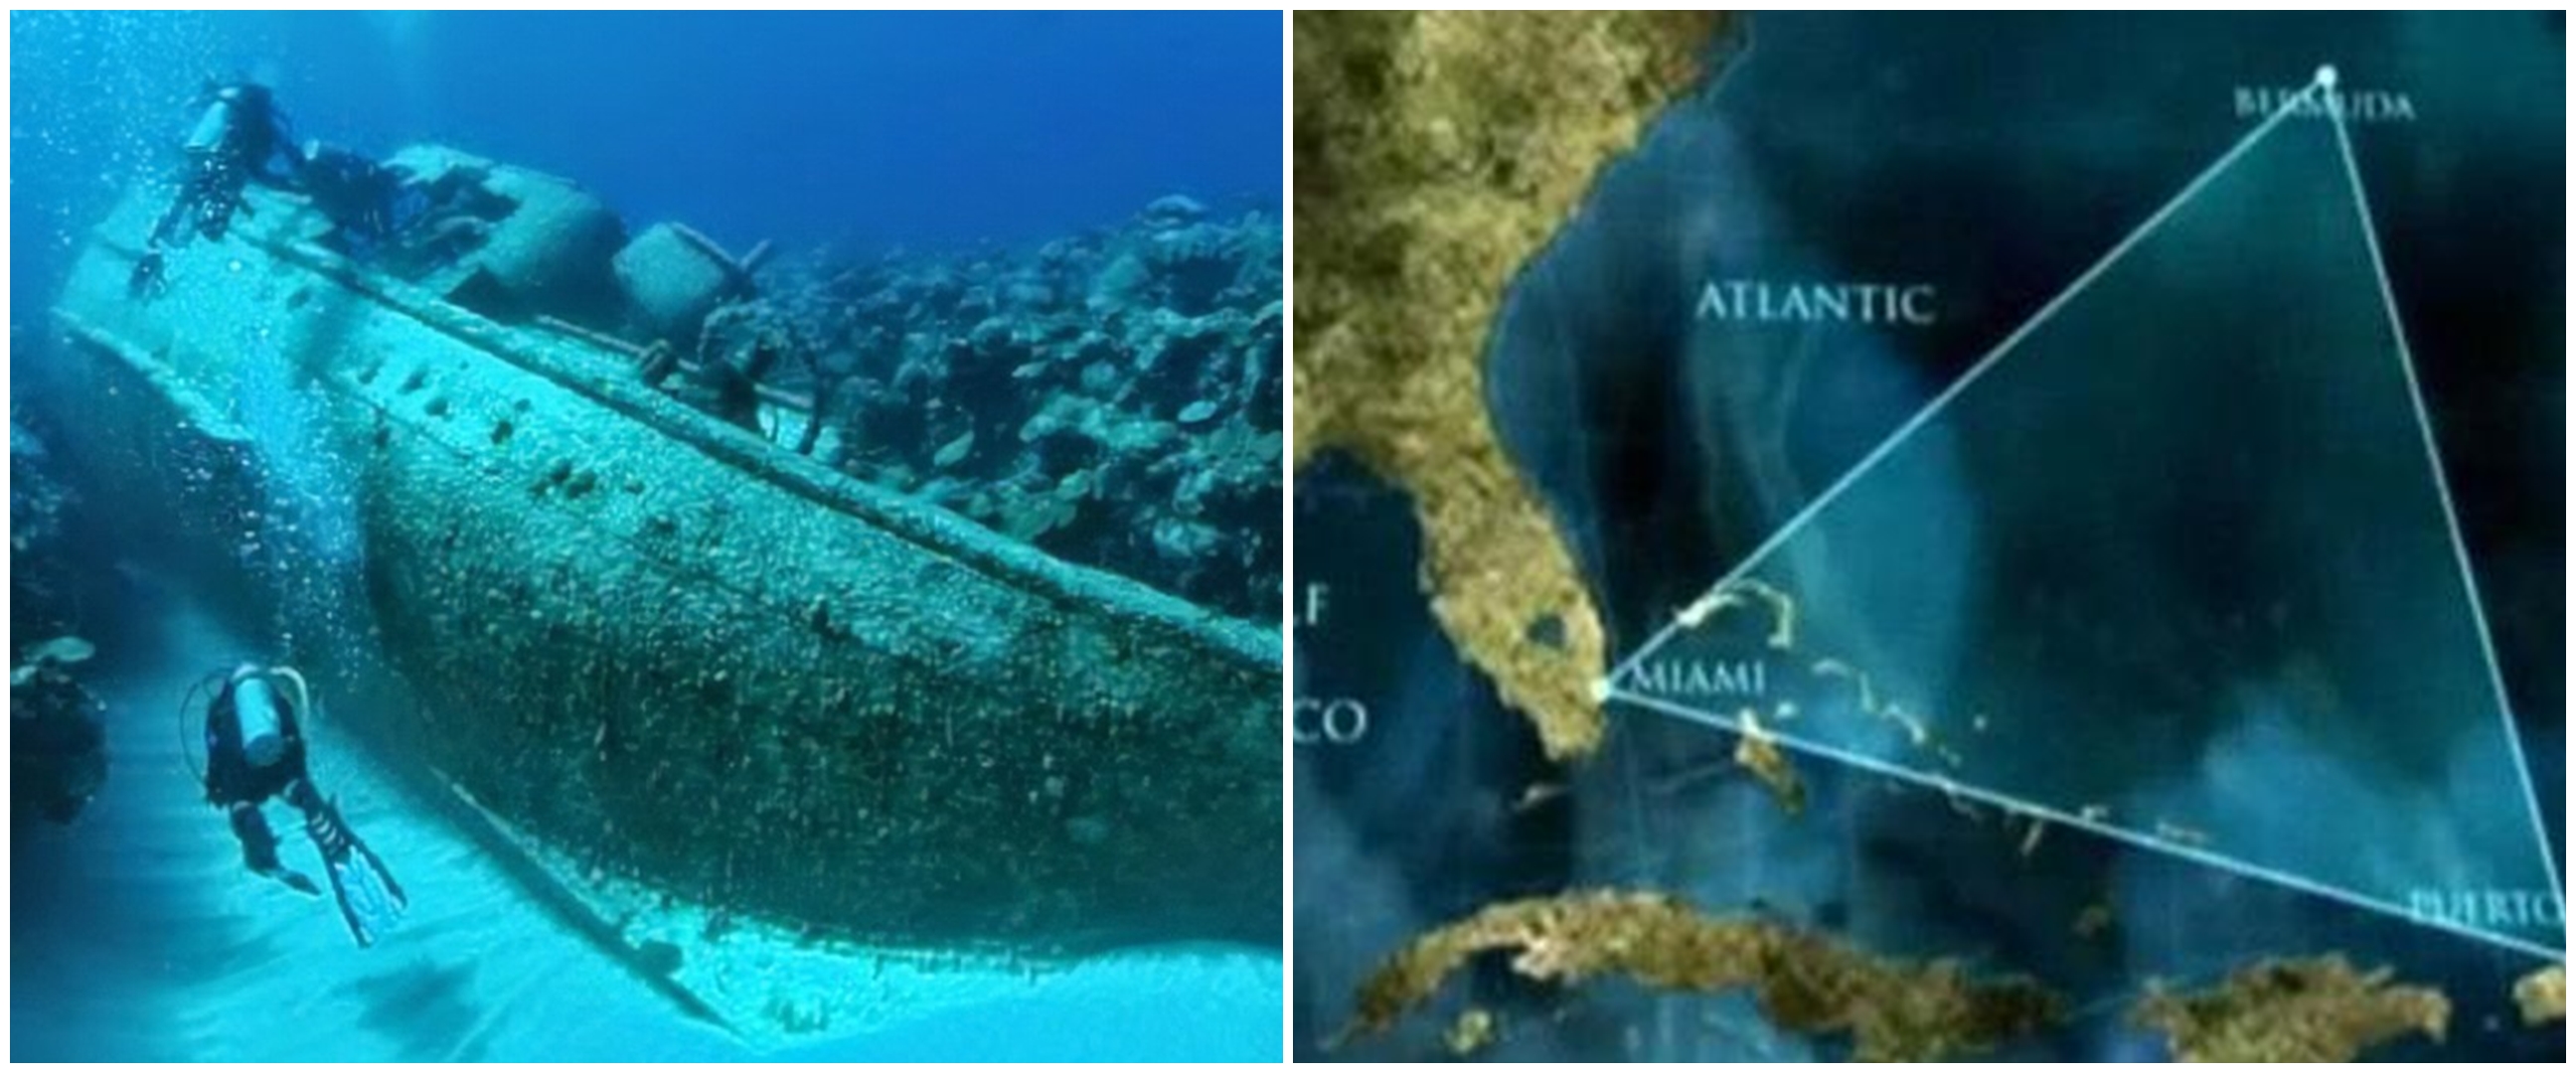 Sering dikaitkan dengan mistis, ini alasan kenapa banyak pesawat dan kapal hilang di Segitiga Bermuda